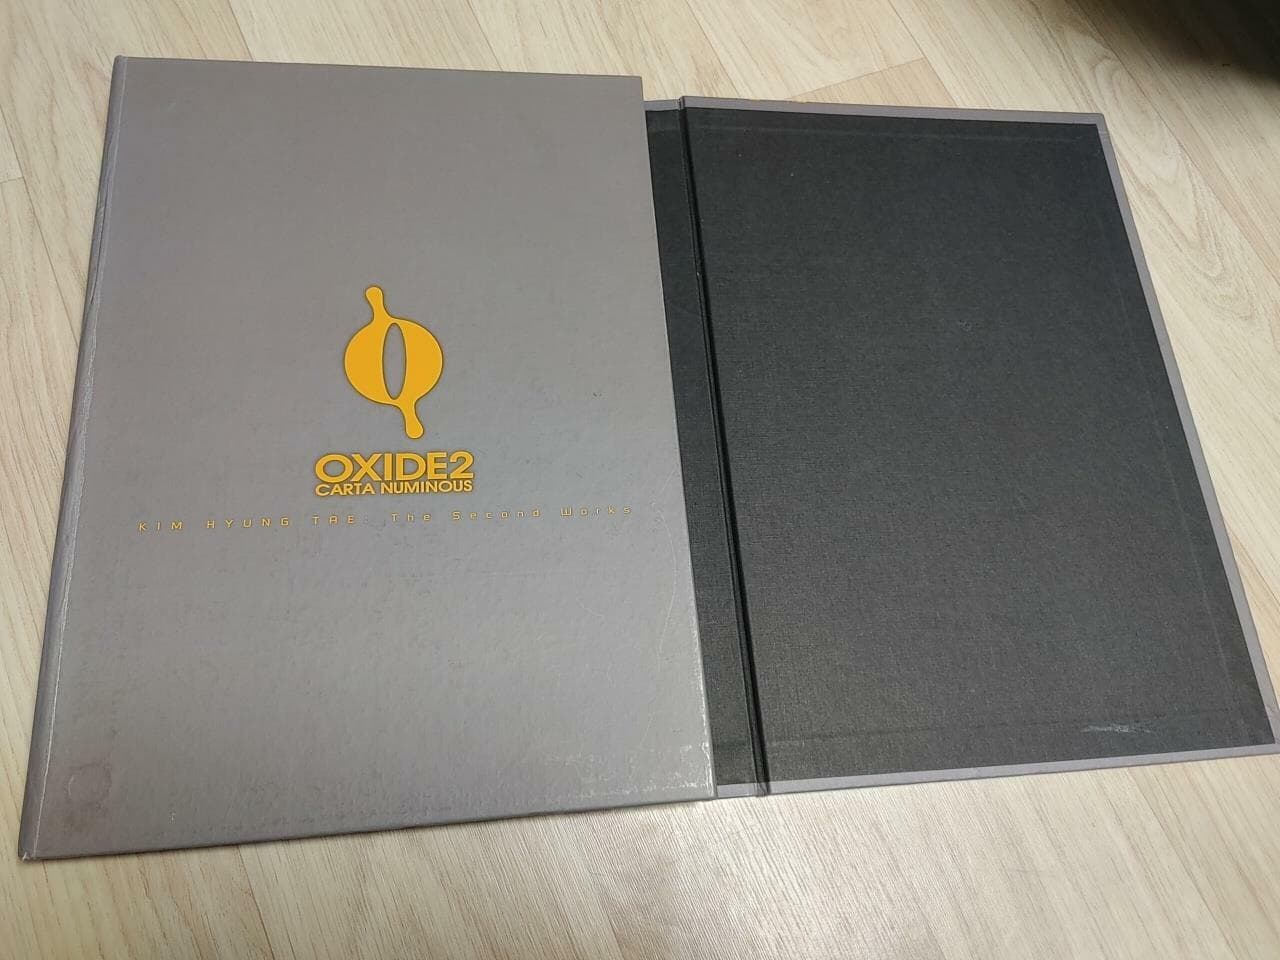 Oxide 2 Carta Numinous - Kim Hyung Tae: The Second Works (옥사이드2, 김형태), 초판